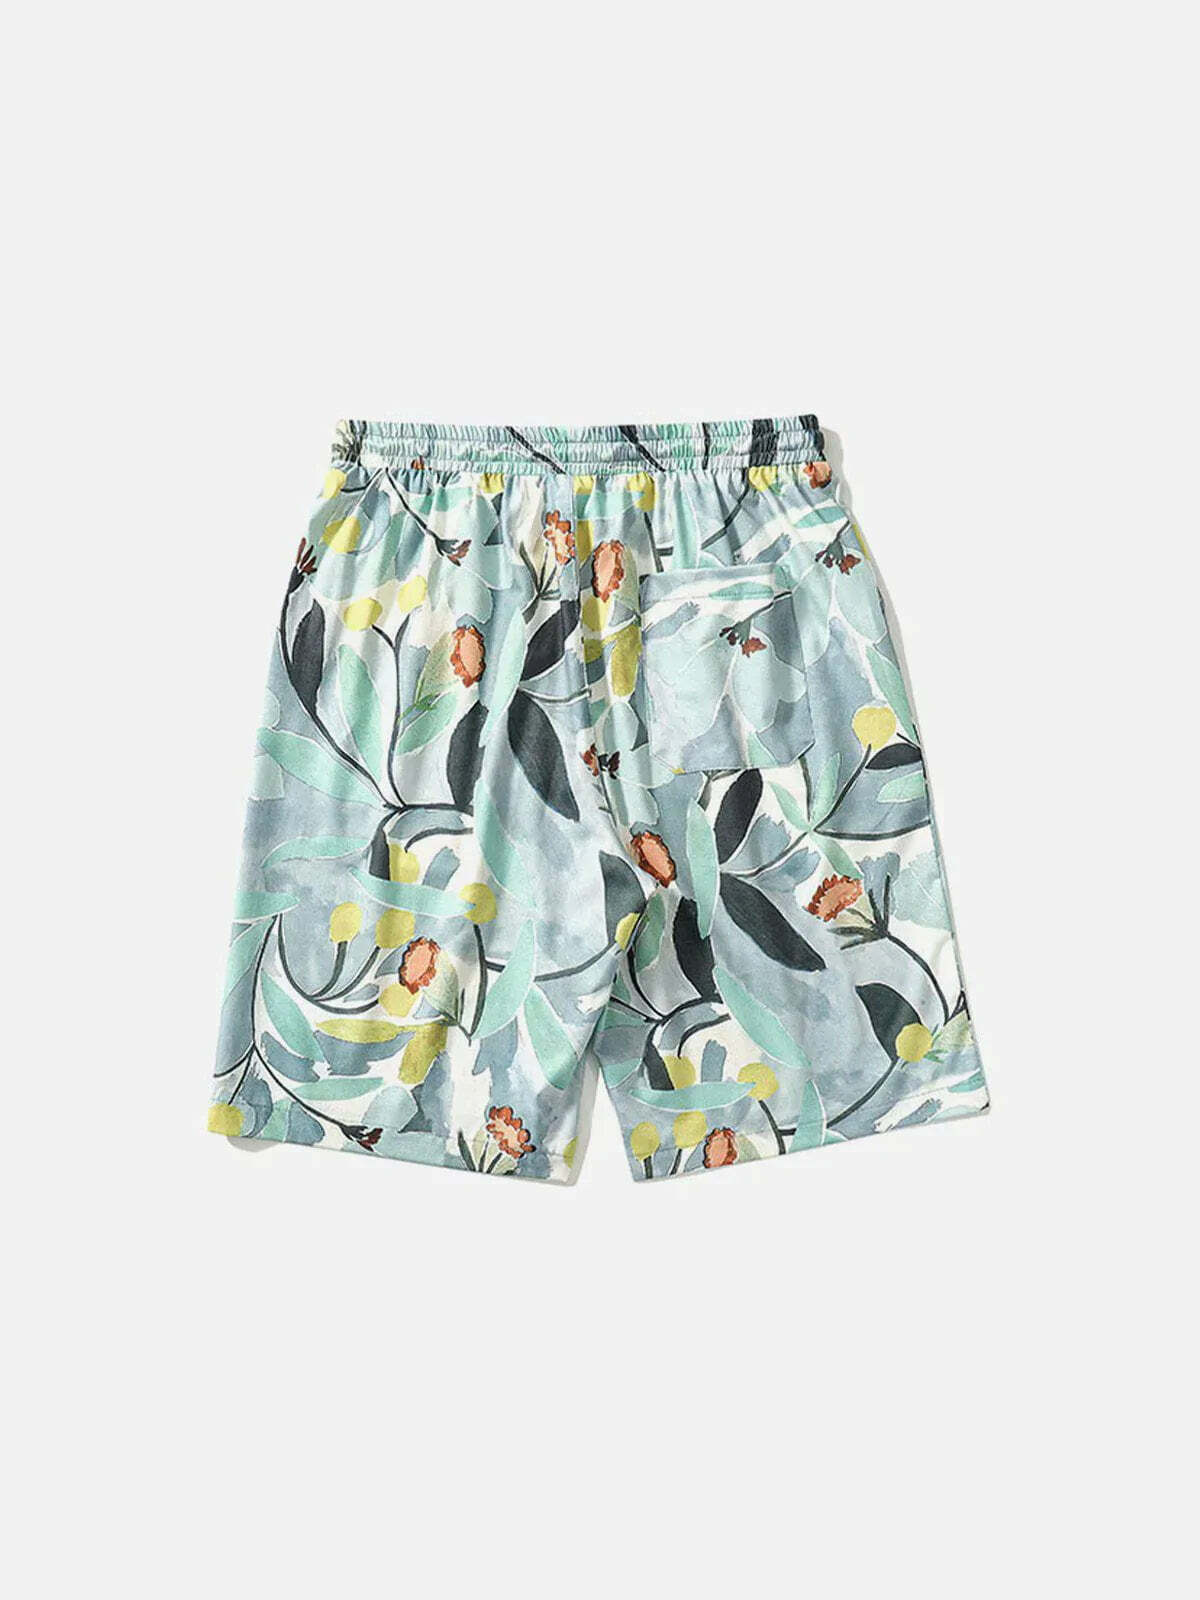 revolutionary lotus print shorts edgy  retro swimwear for a vibrant summer 8564